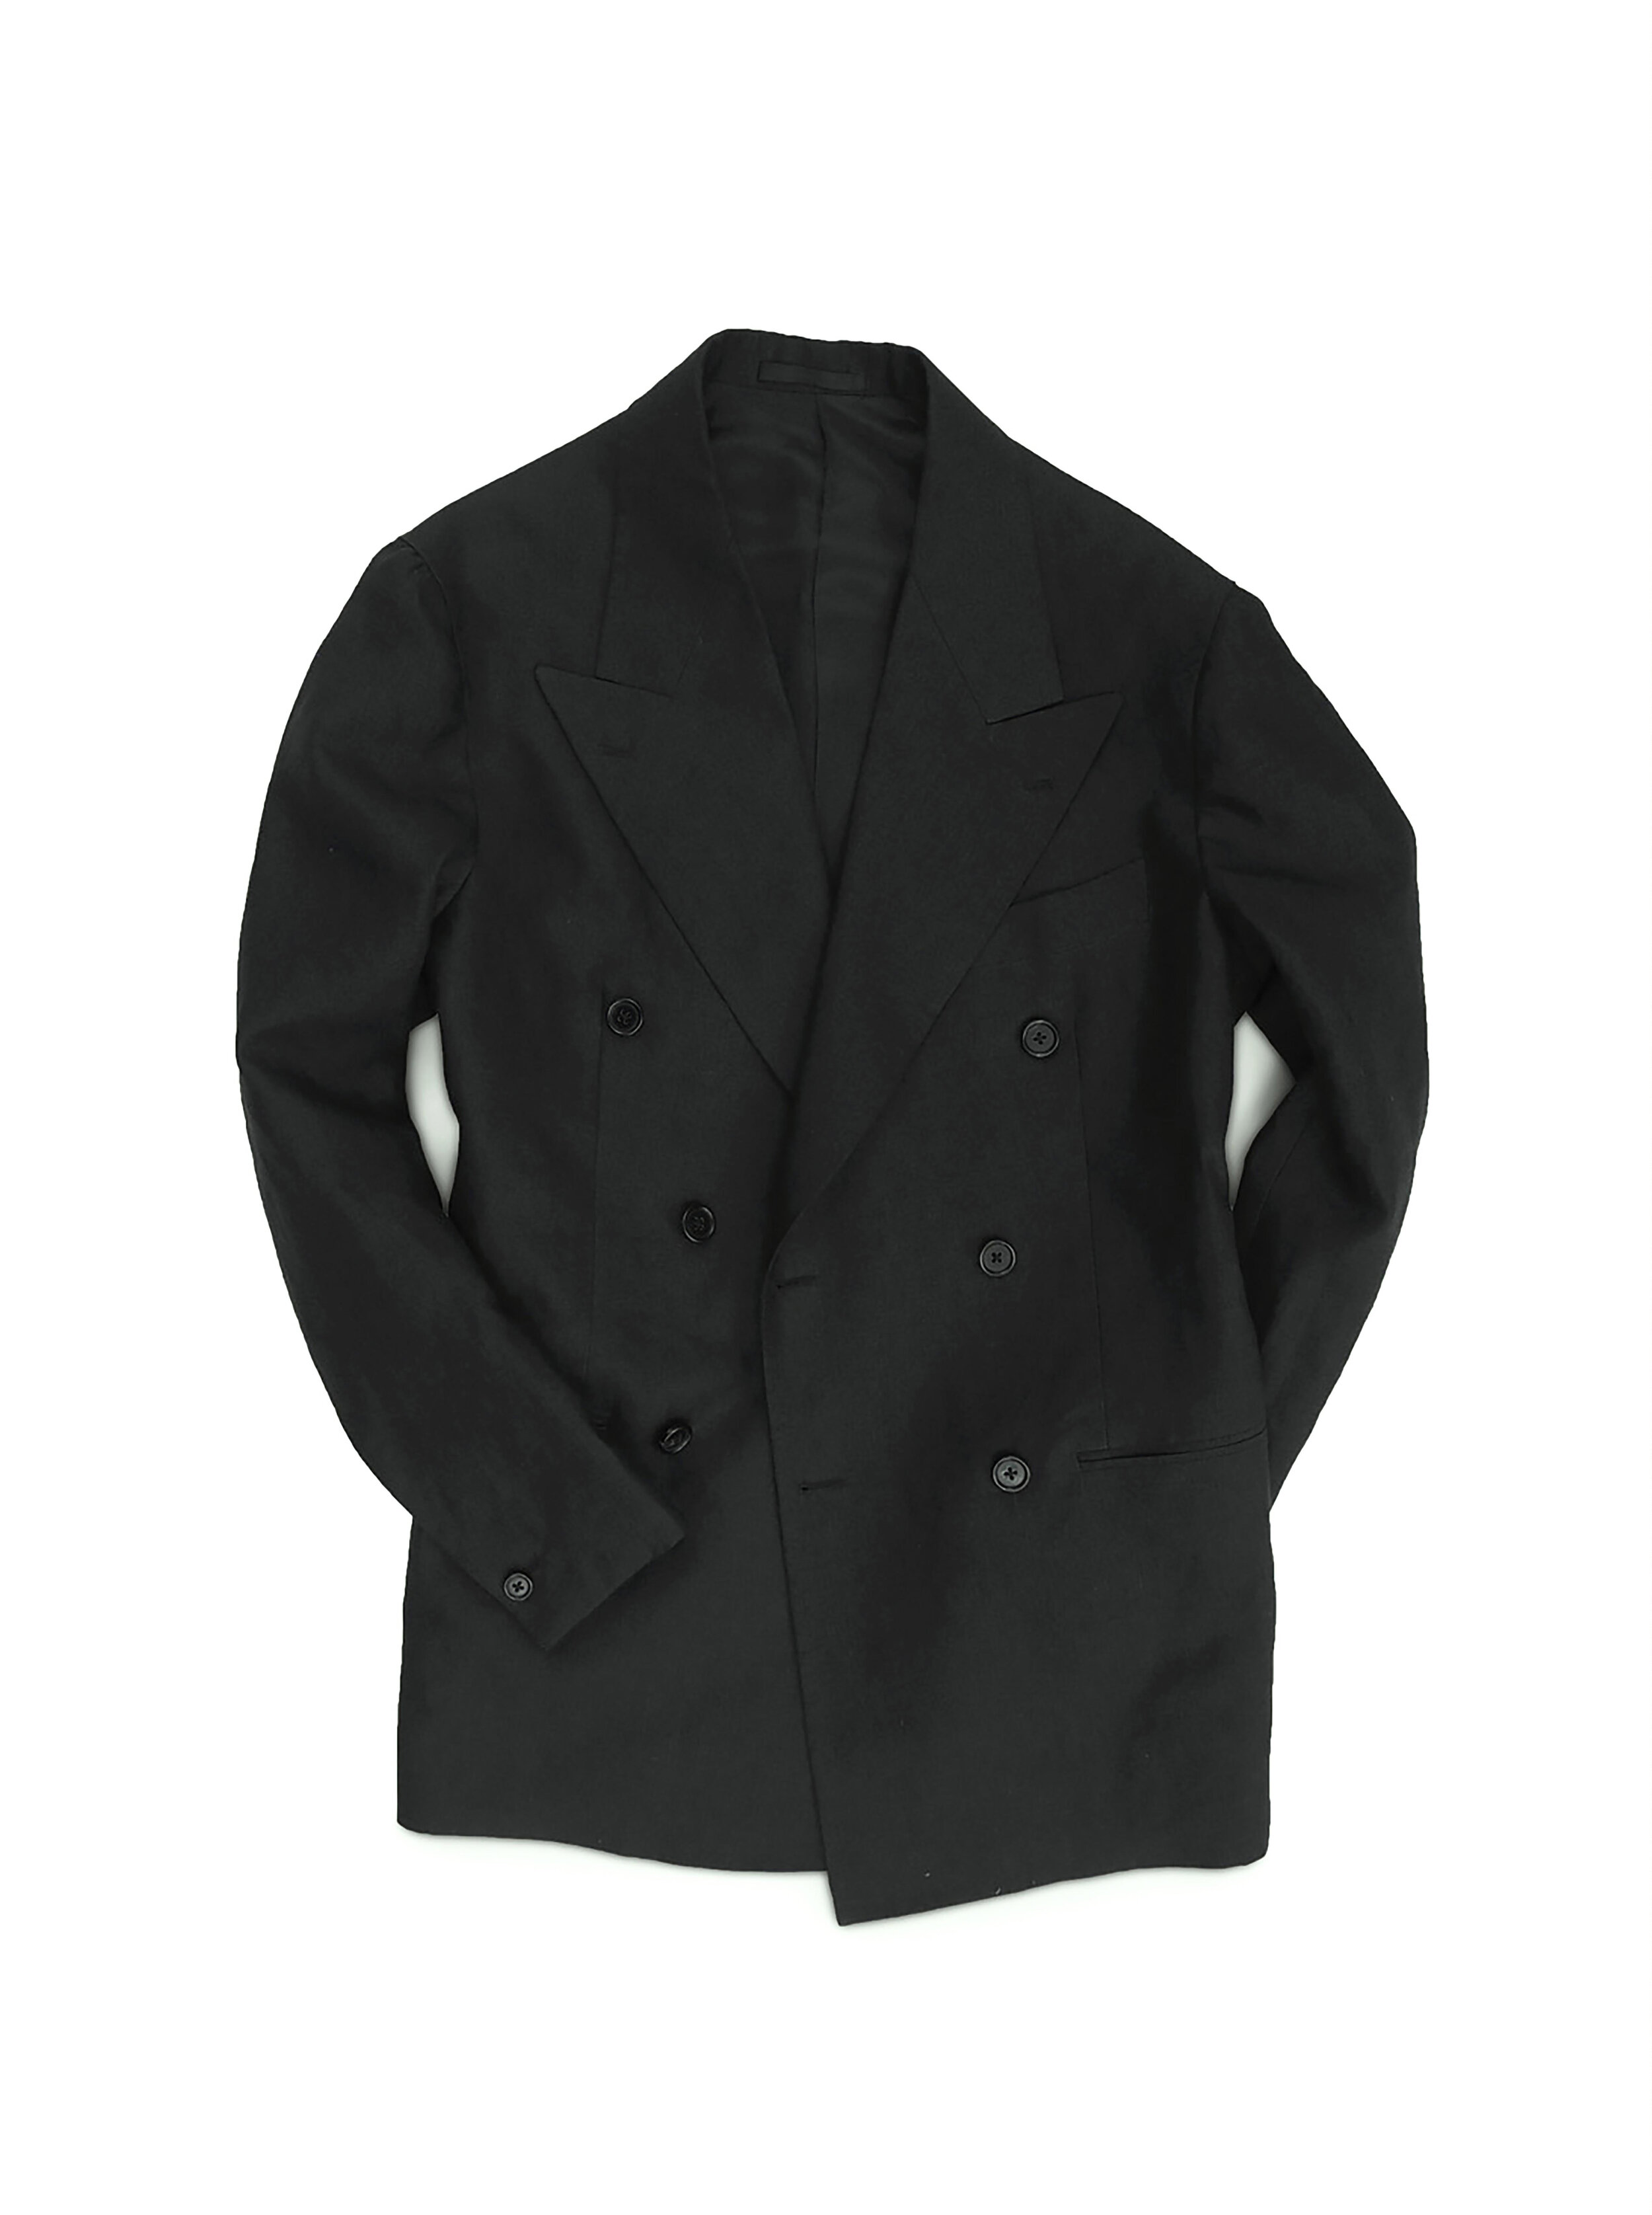 black linen jacket product.jpg